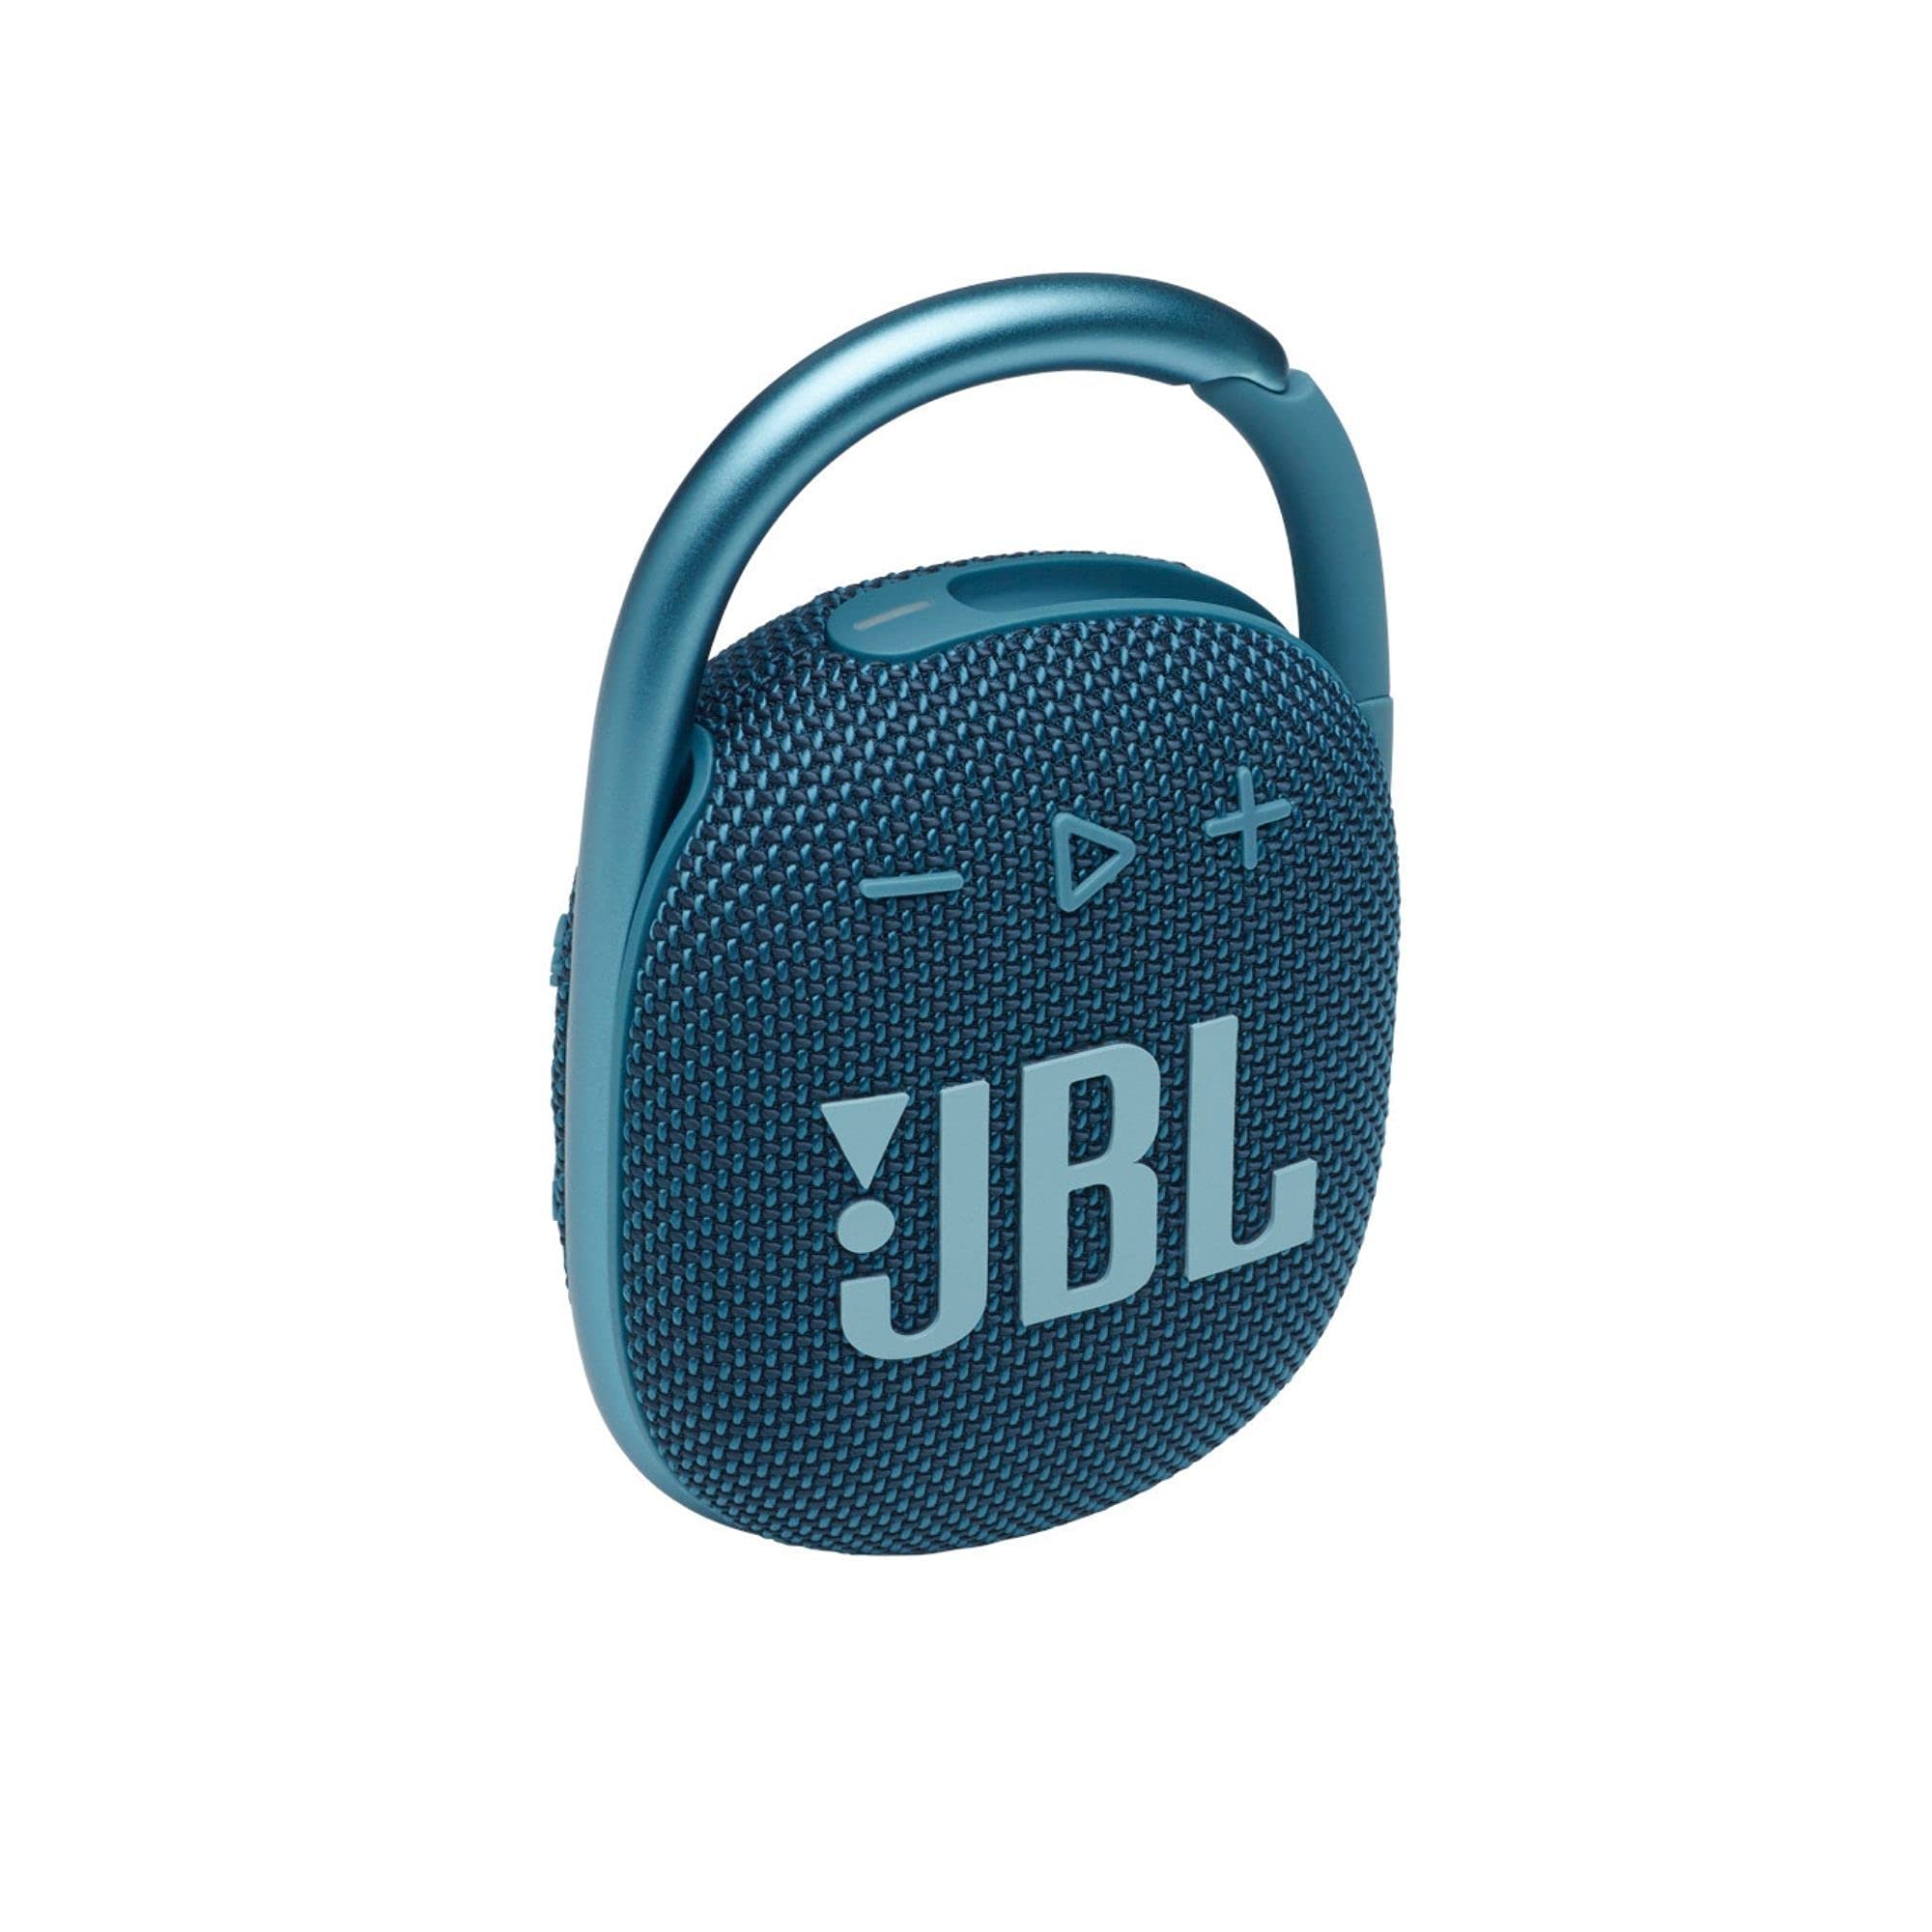  JBL クリップ 4 - ポータブル ミニ Bluetooth スピーカー、大音量と迫力の低音、一体型カラビナ、IP67 防水防塵、10 時間再生、家庭、アウトドア、旅行...